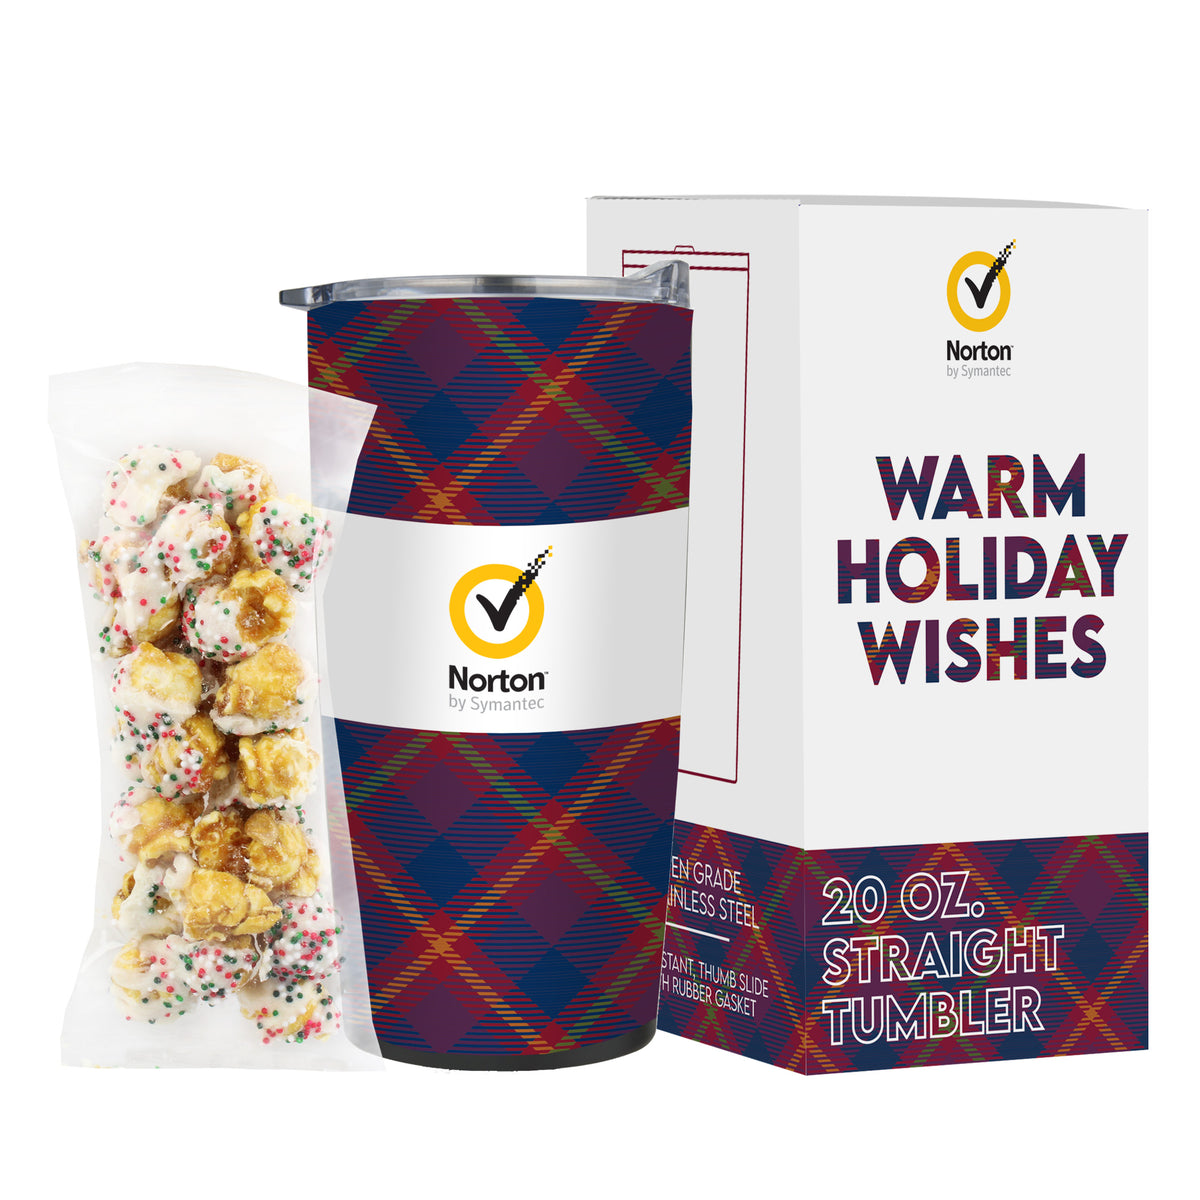 Straight Tumbler - 20 oz., Holiday Greetings Gift Set, Sugar Cookie Crunch Popcorn